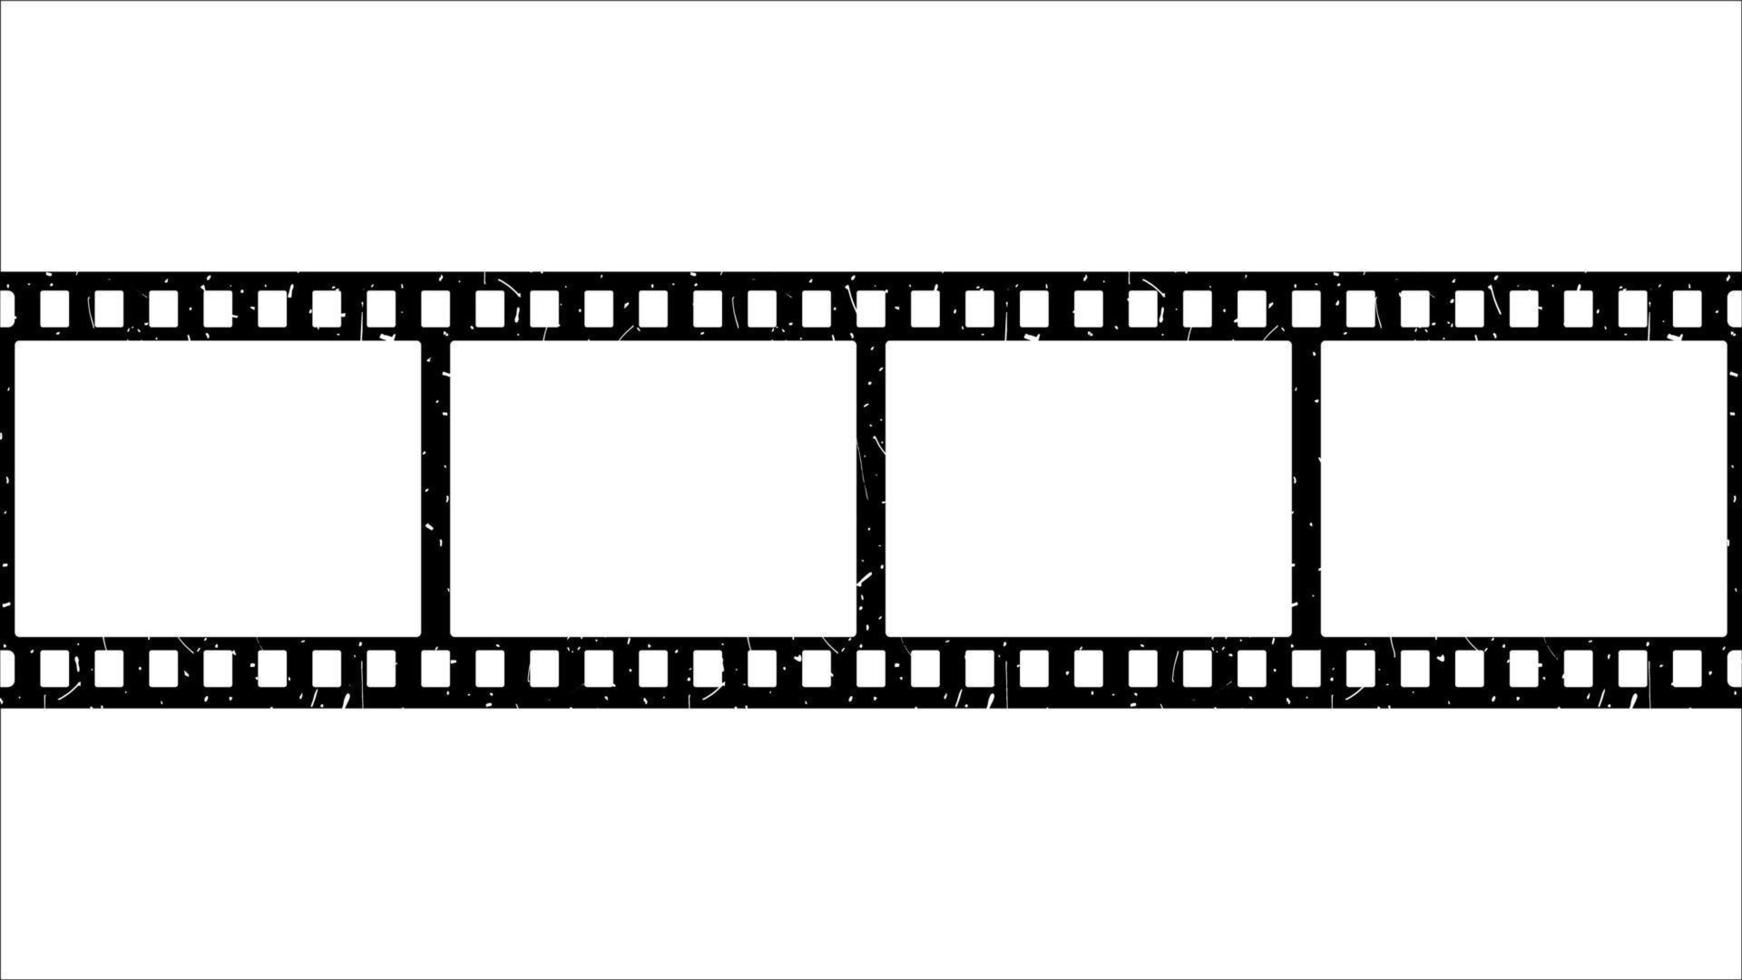 Film strip. Old retro negative film frame. Vector illustration isolated on white